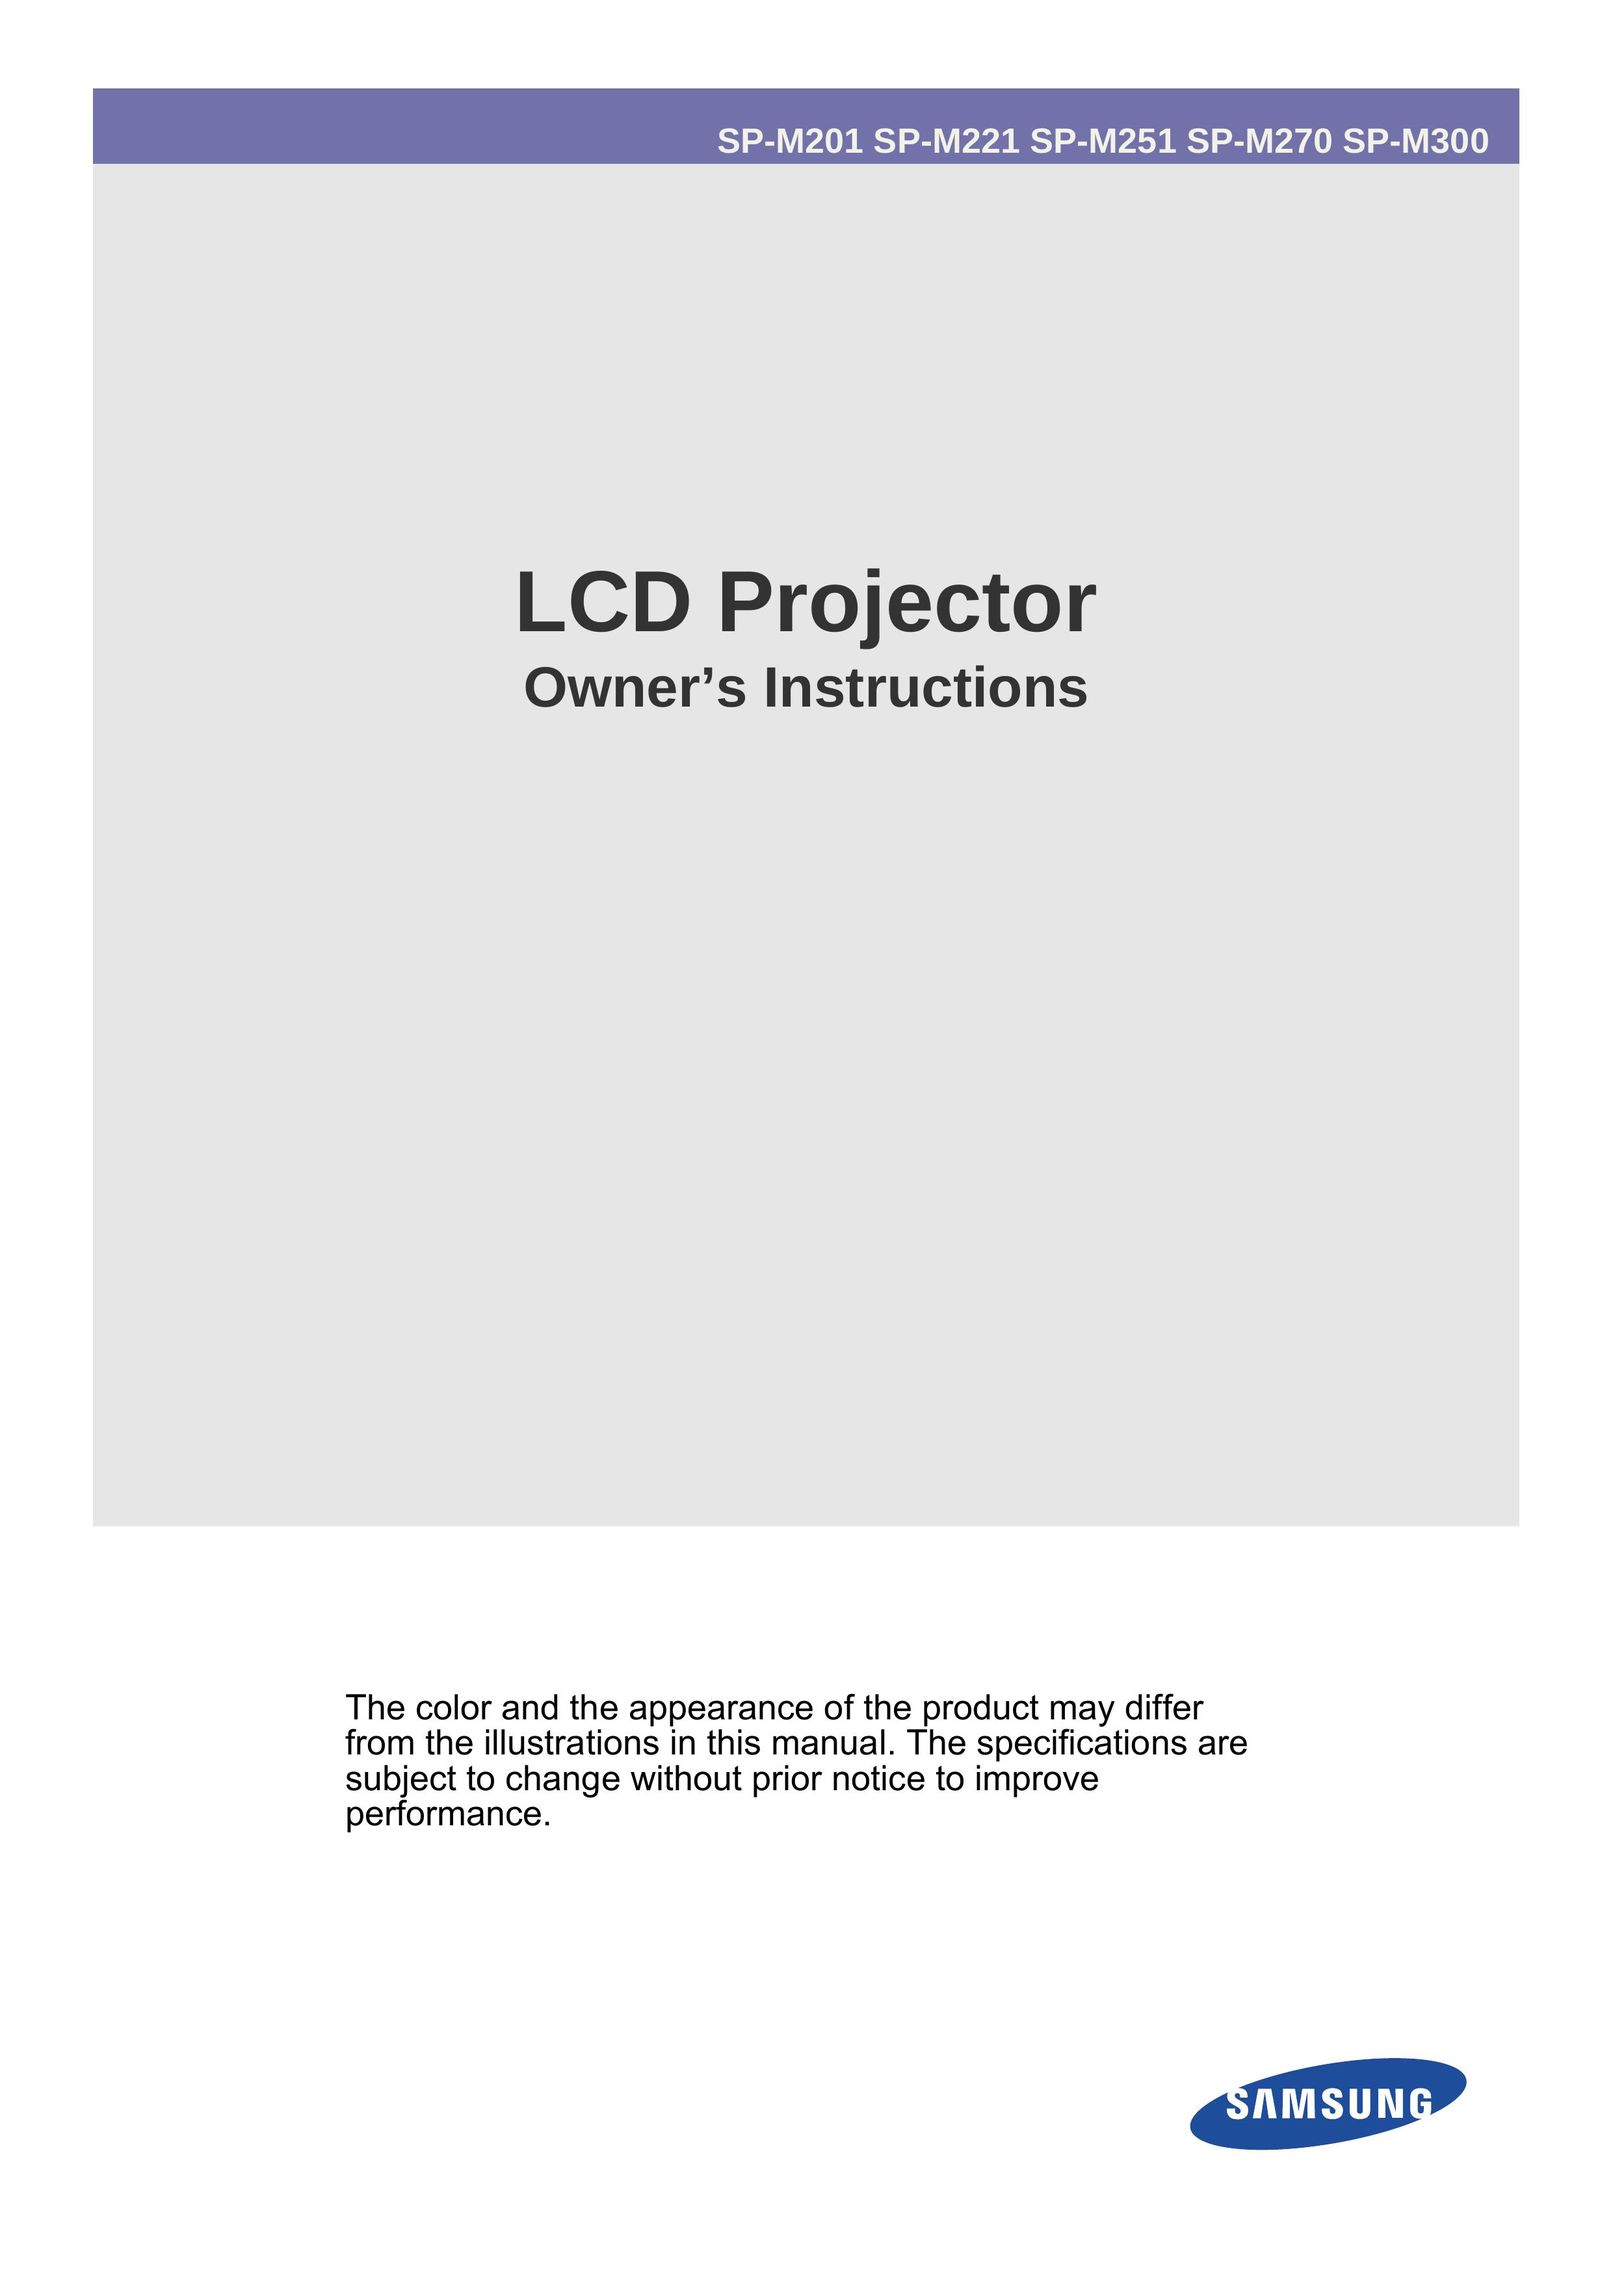 Samsung SP-M270 Projector User Manual